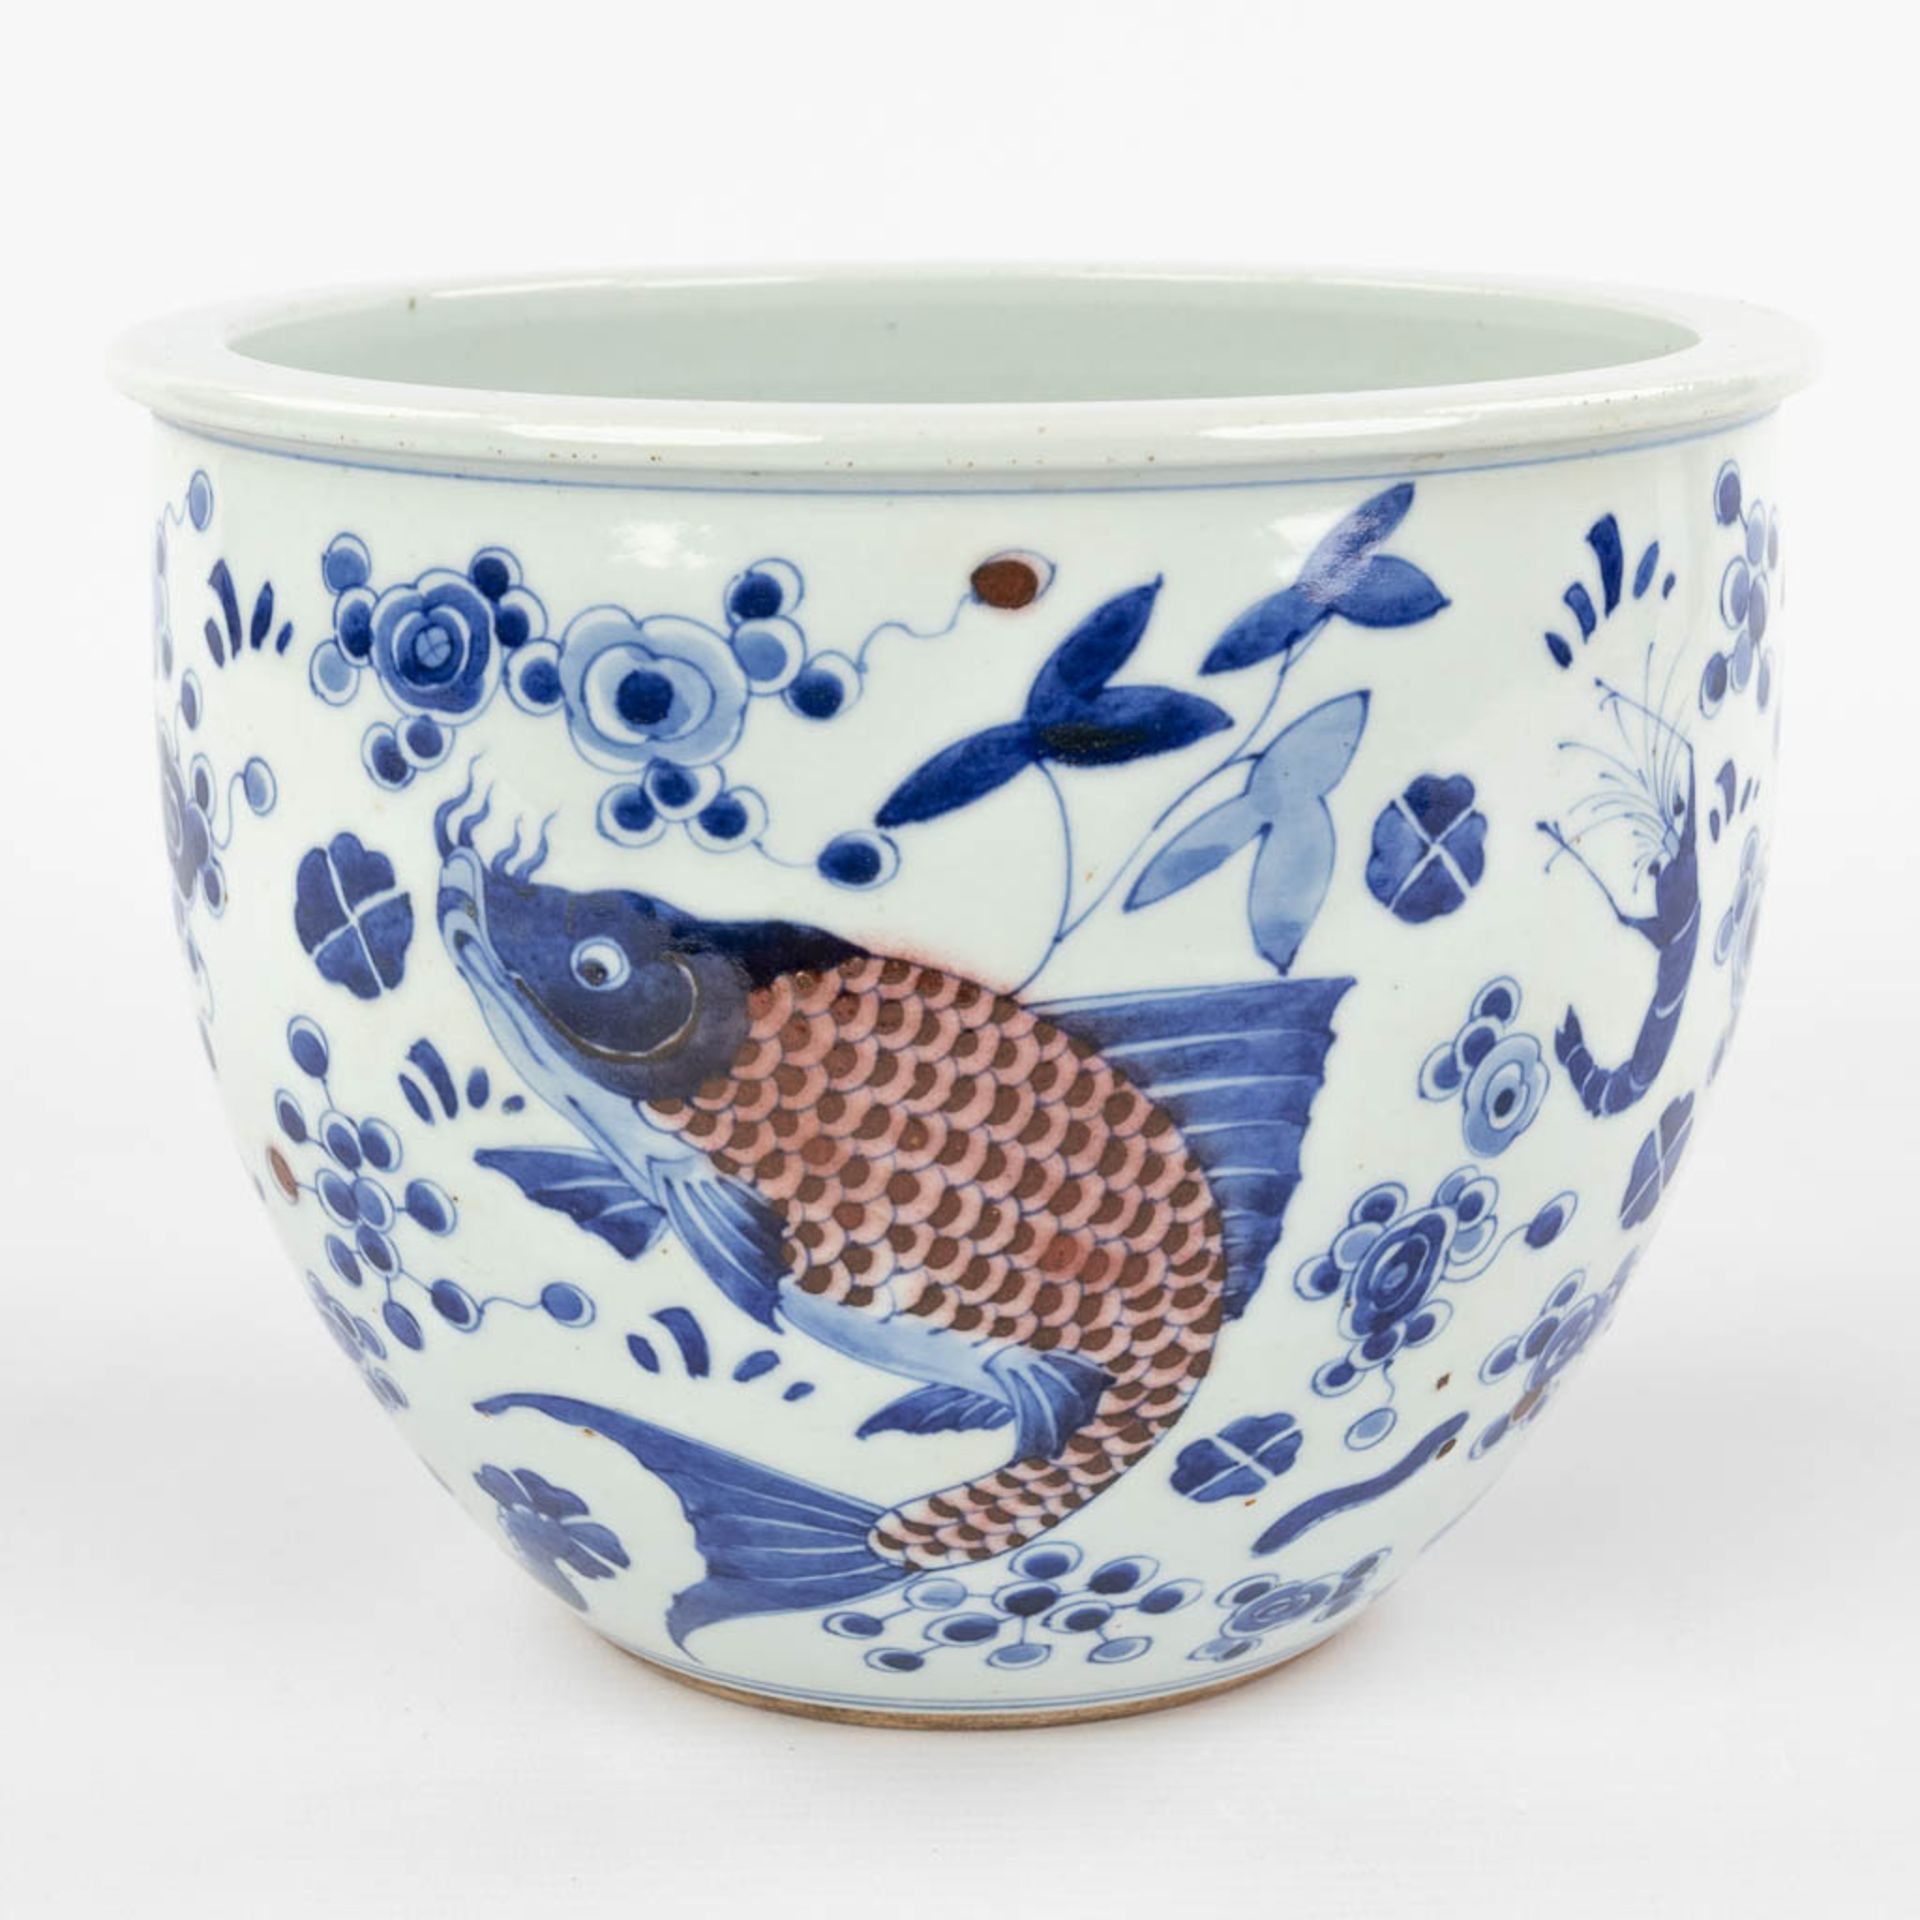 A large Chinese porcelain fish bowl, blue-white decor, 18th/19th C. (H:17 x D:22 cm)